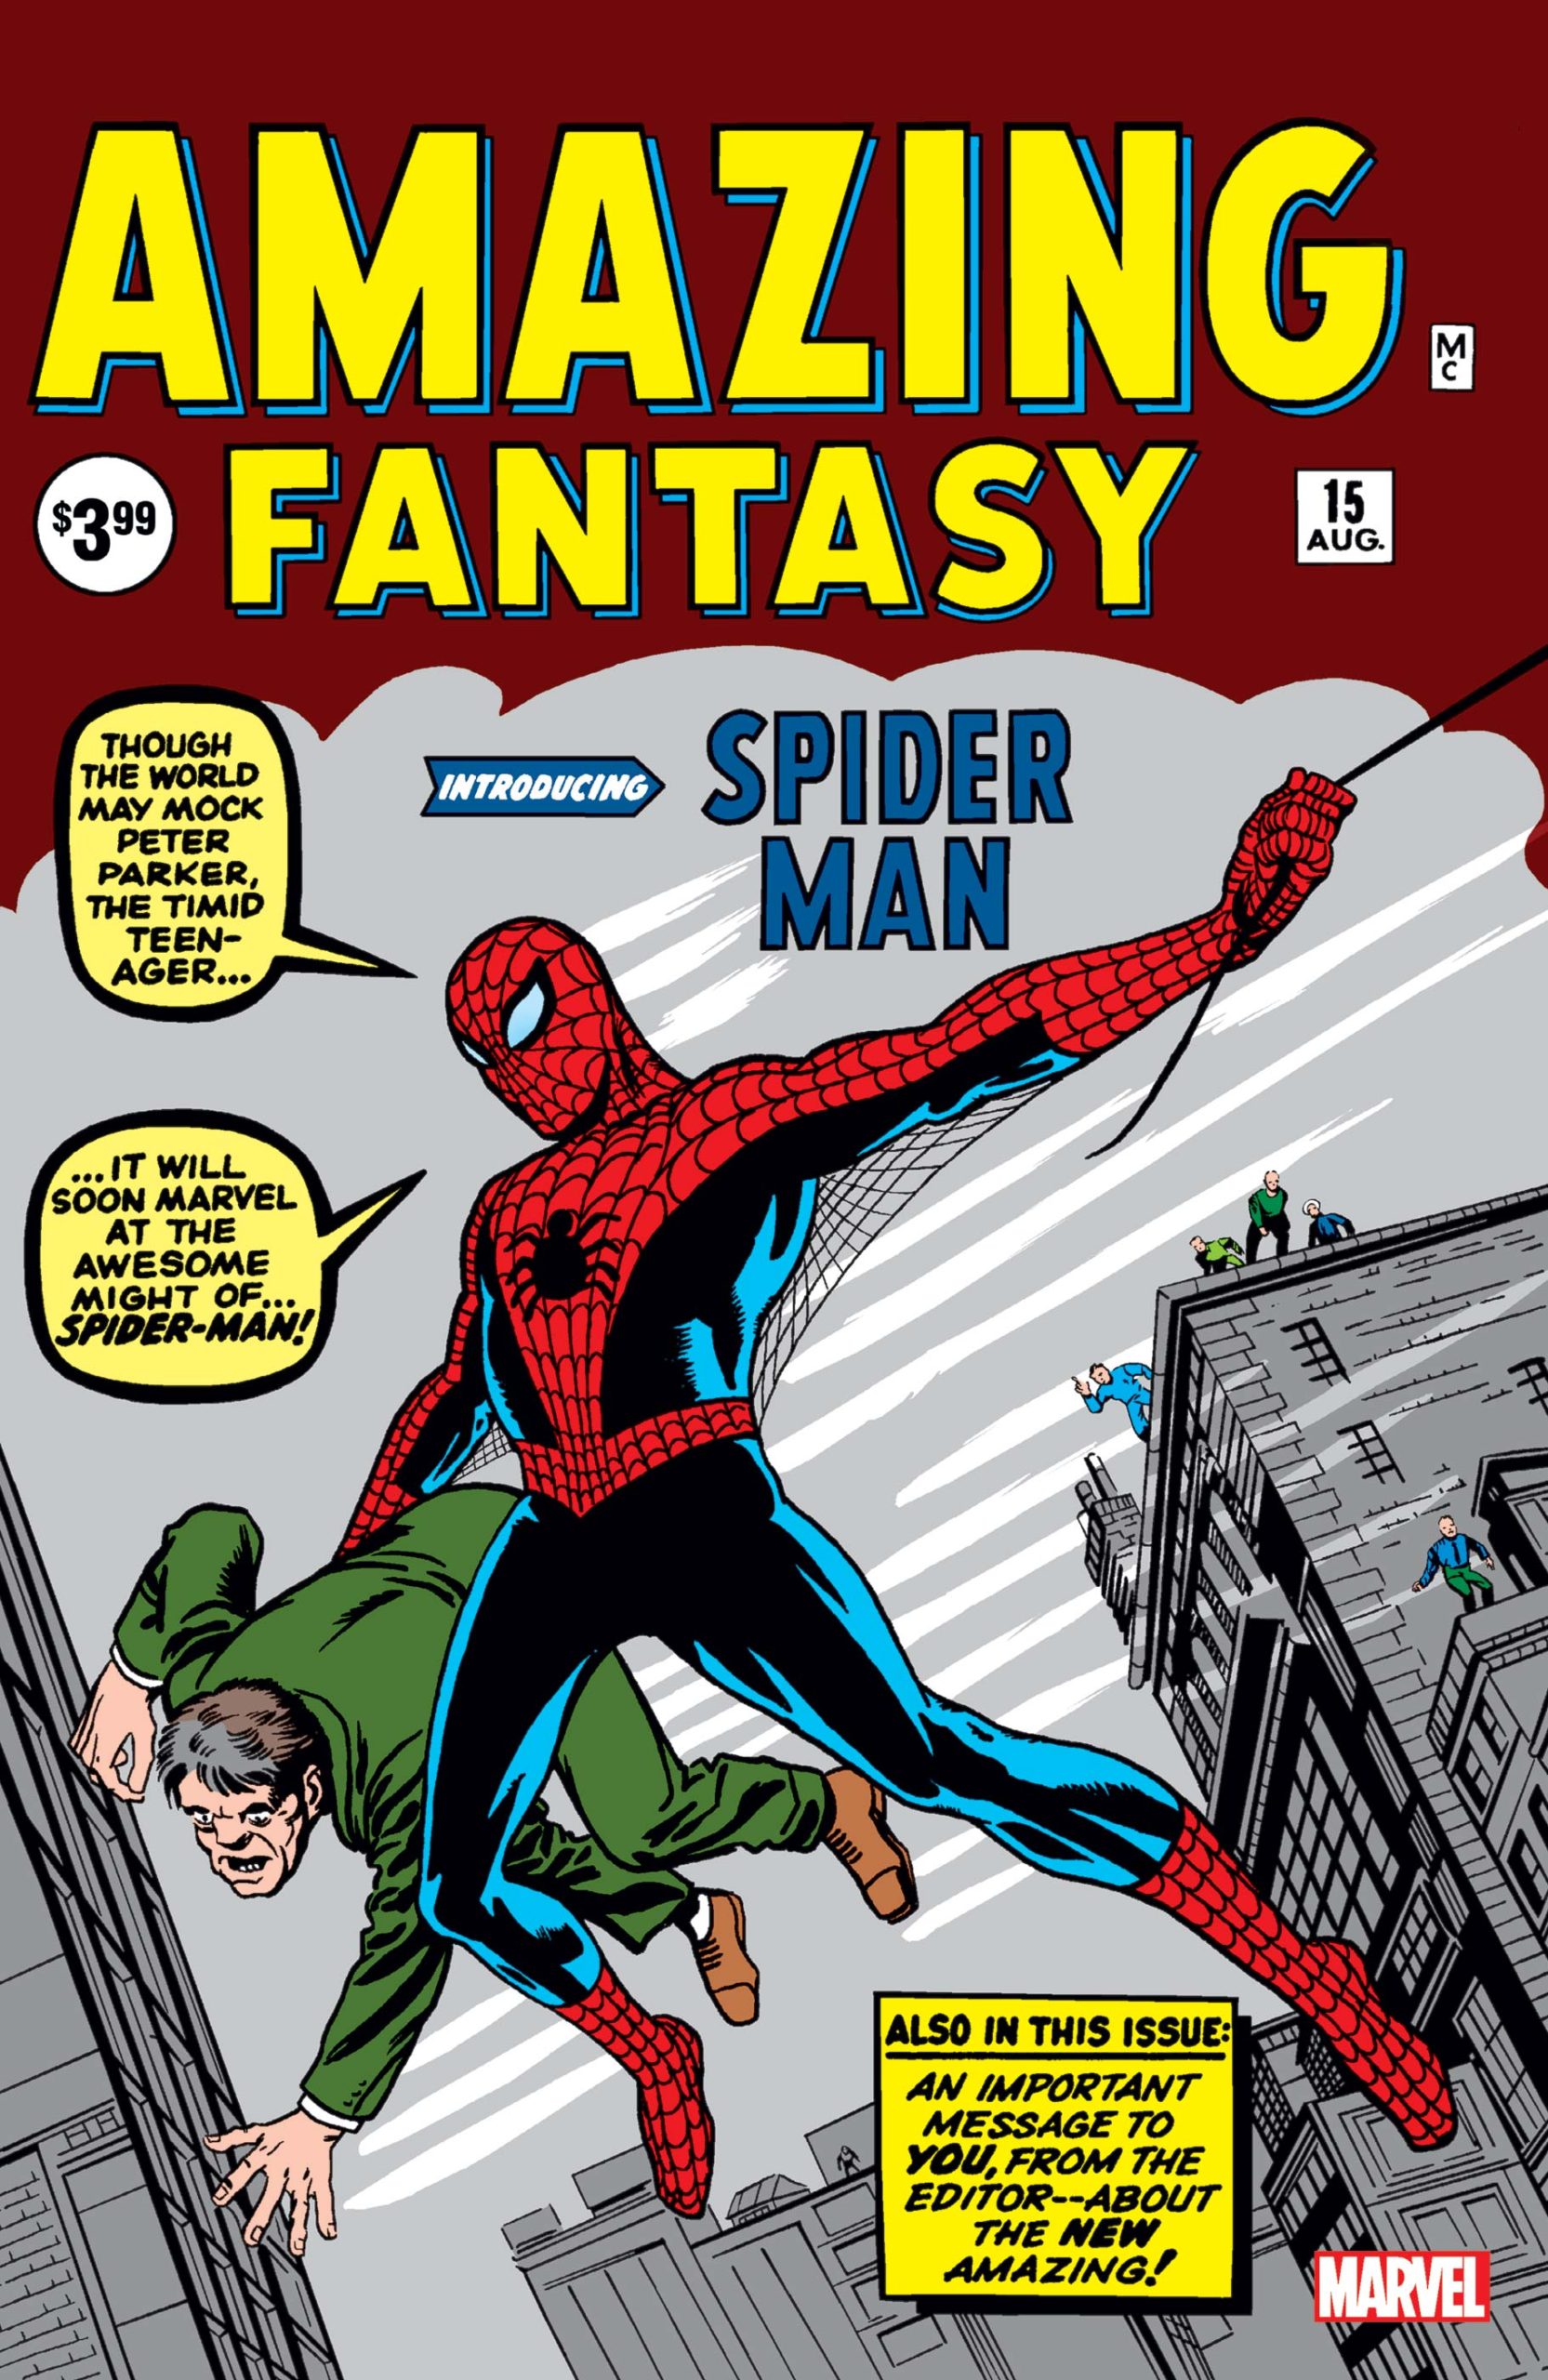 Marvel Digital Comics — Amazing Fantasy #15, by VeVe Digital Collectibles, VeVe